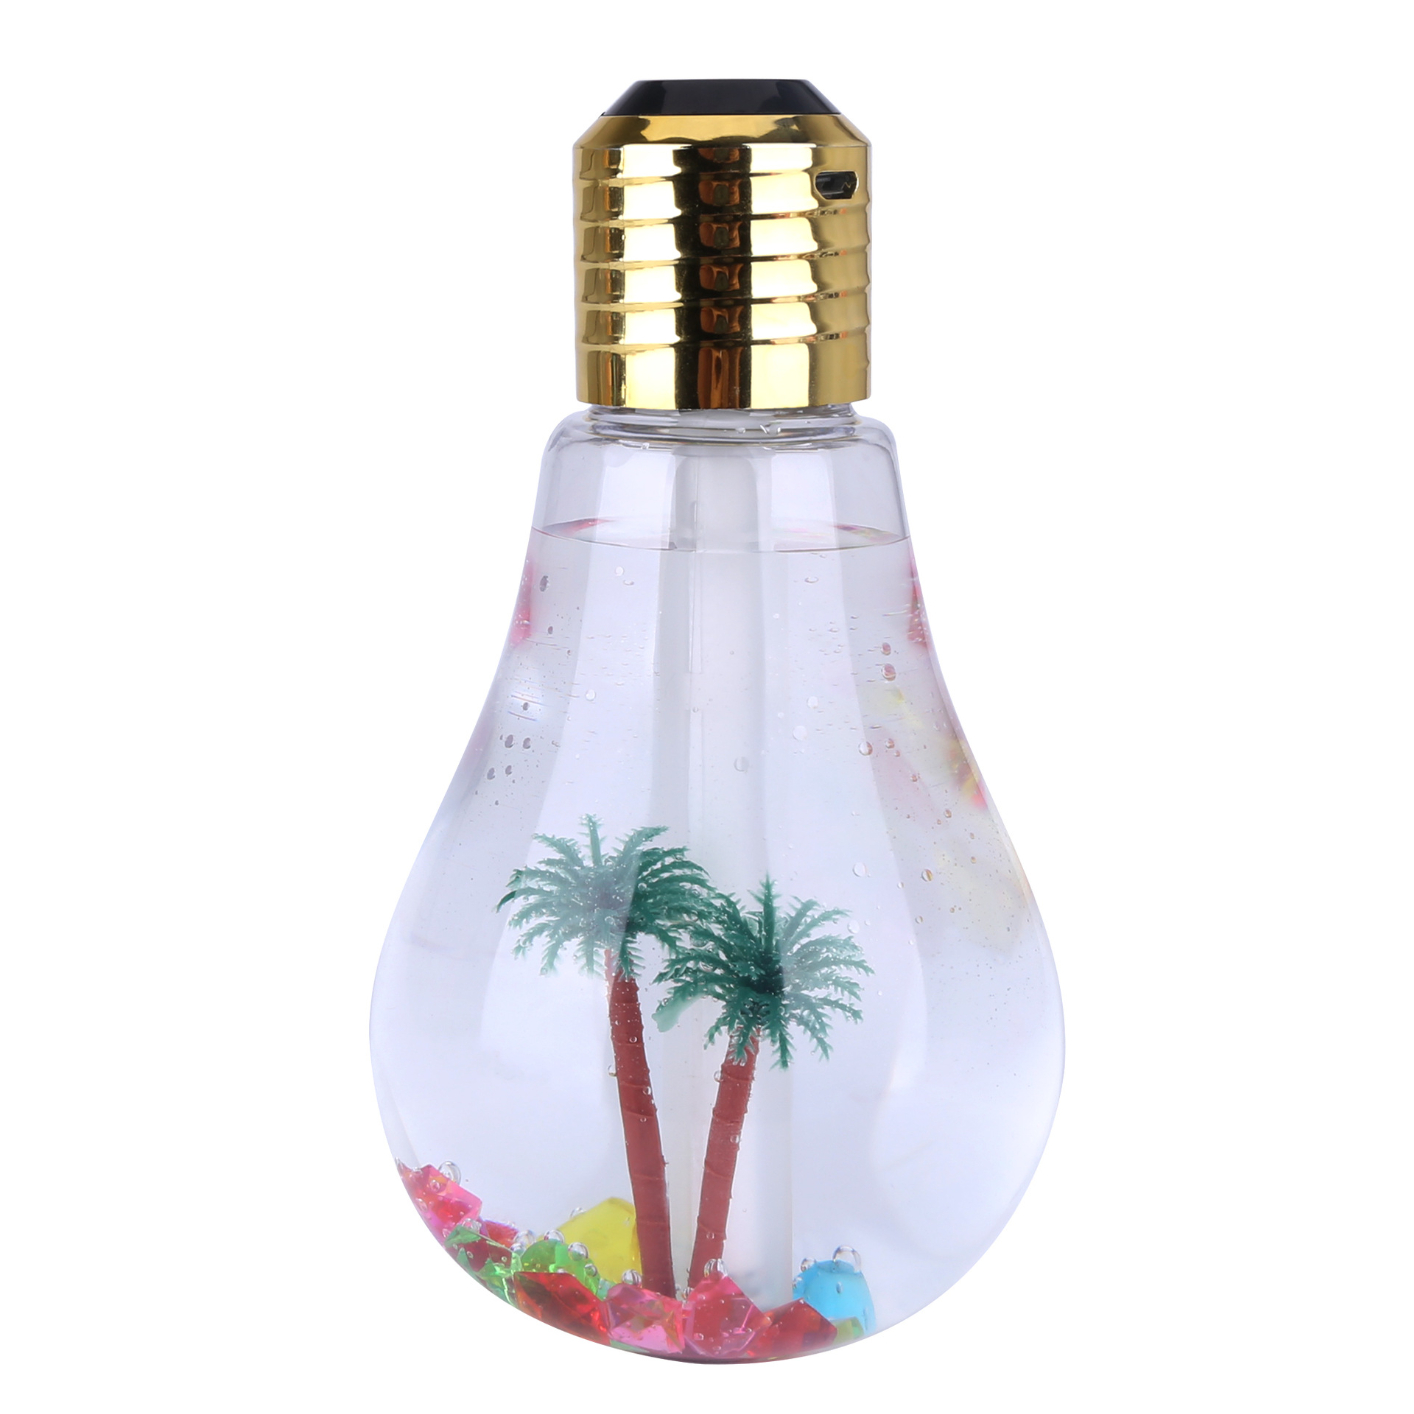 LA-0601 Creative USB Ultrasonic Humidifier LED Night Light Mini Aroma Diffuser Aromatherapy Mist Maker Bottle Bulb Humidifier for Home
